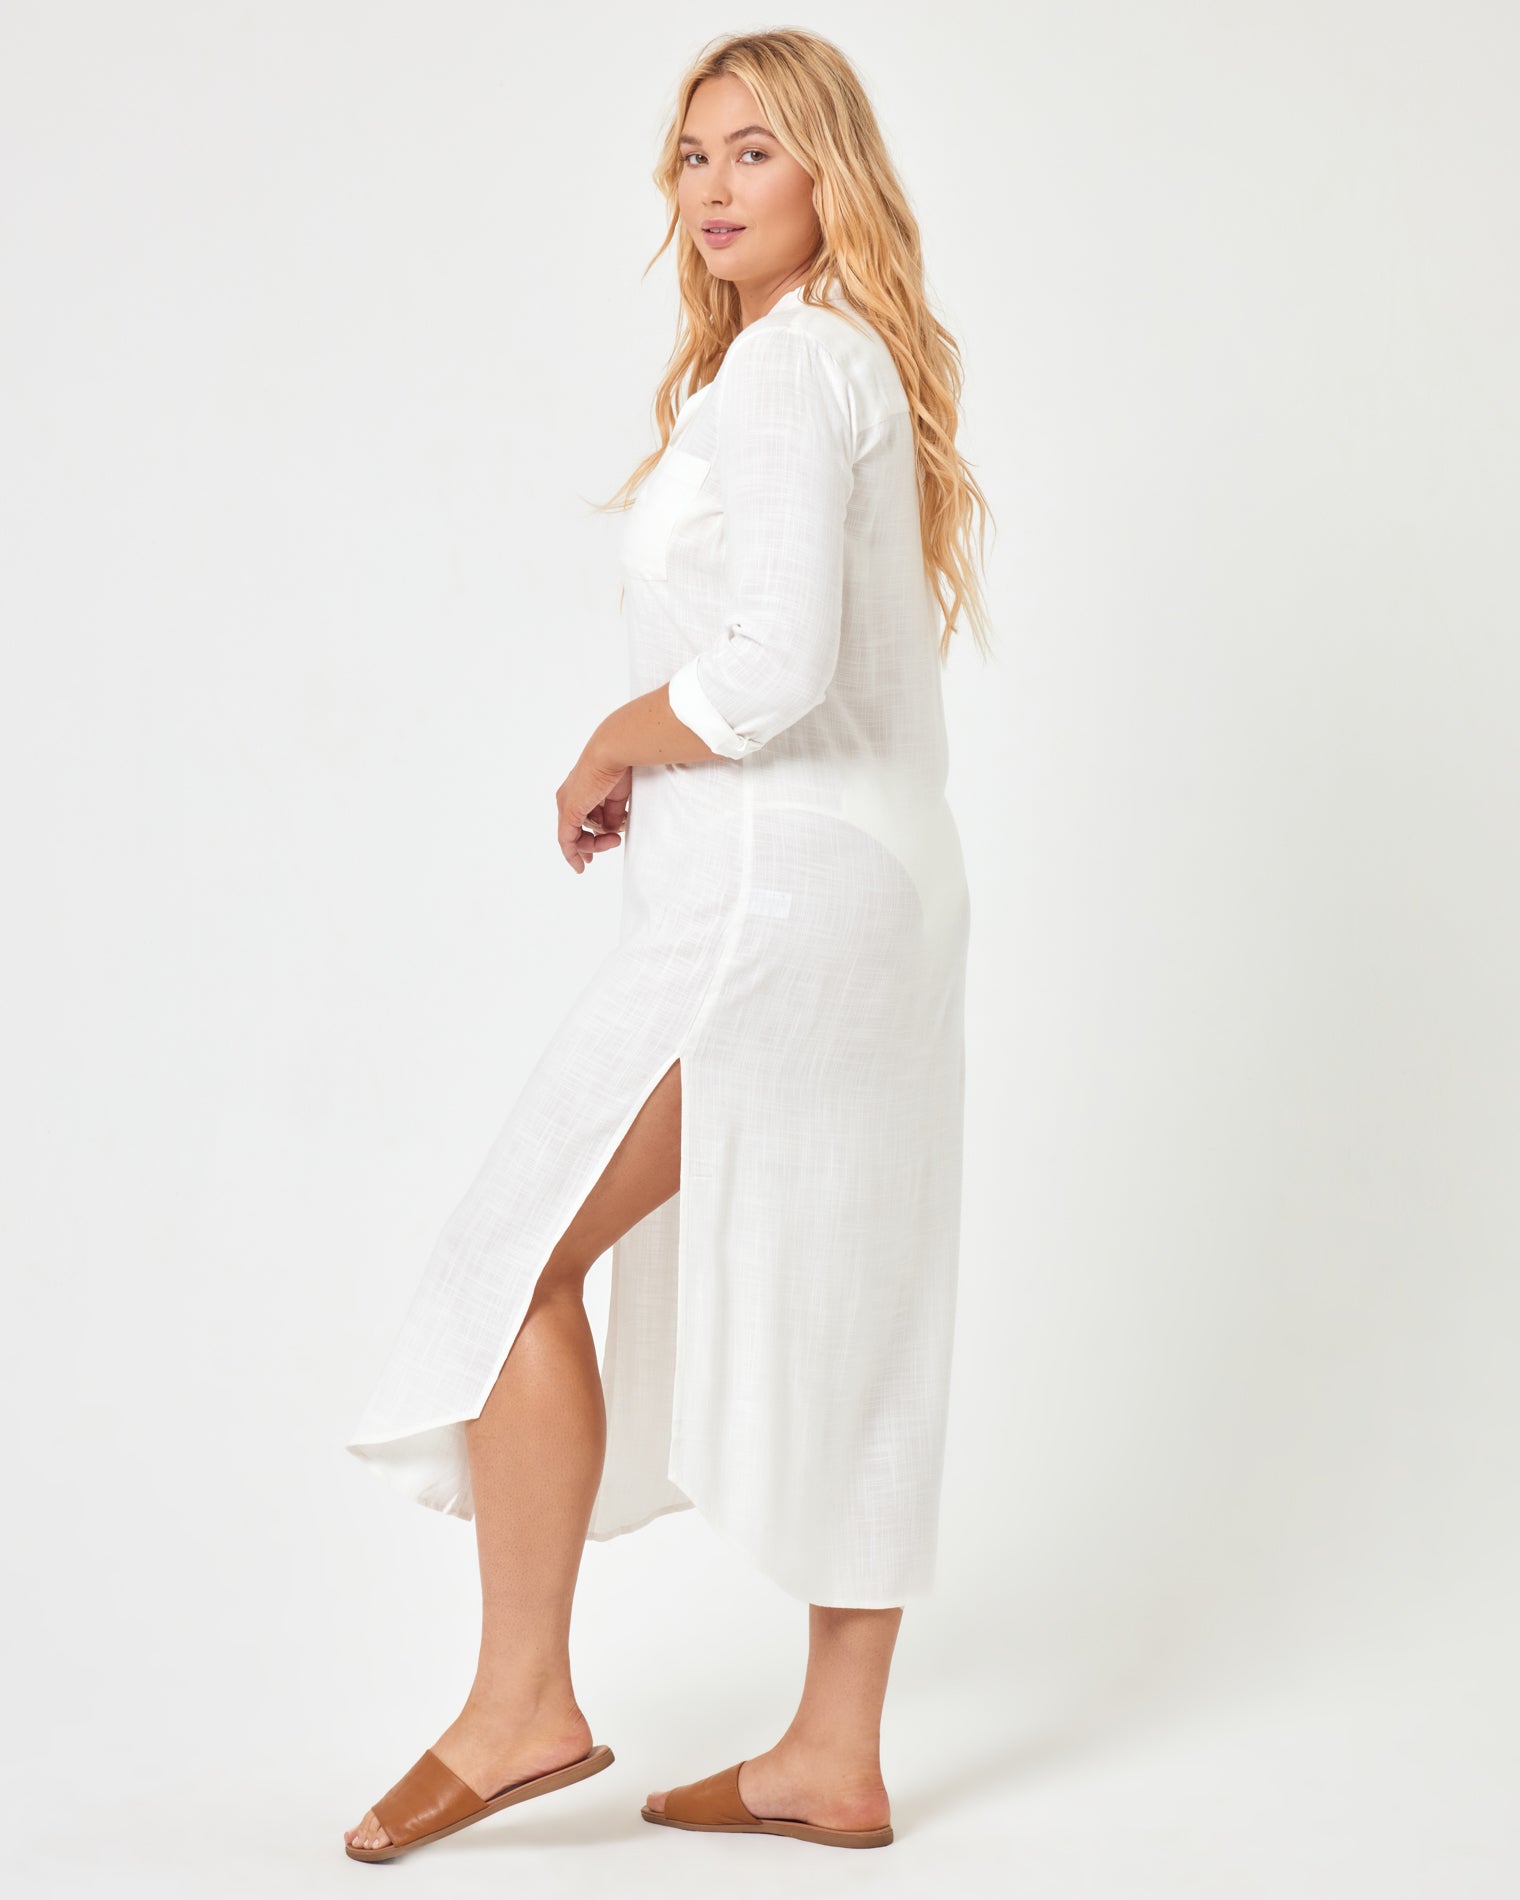 Presley Dress - Cream Cream | Model: Sydney (size XL)